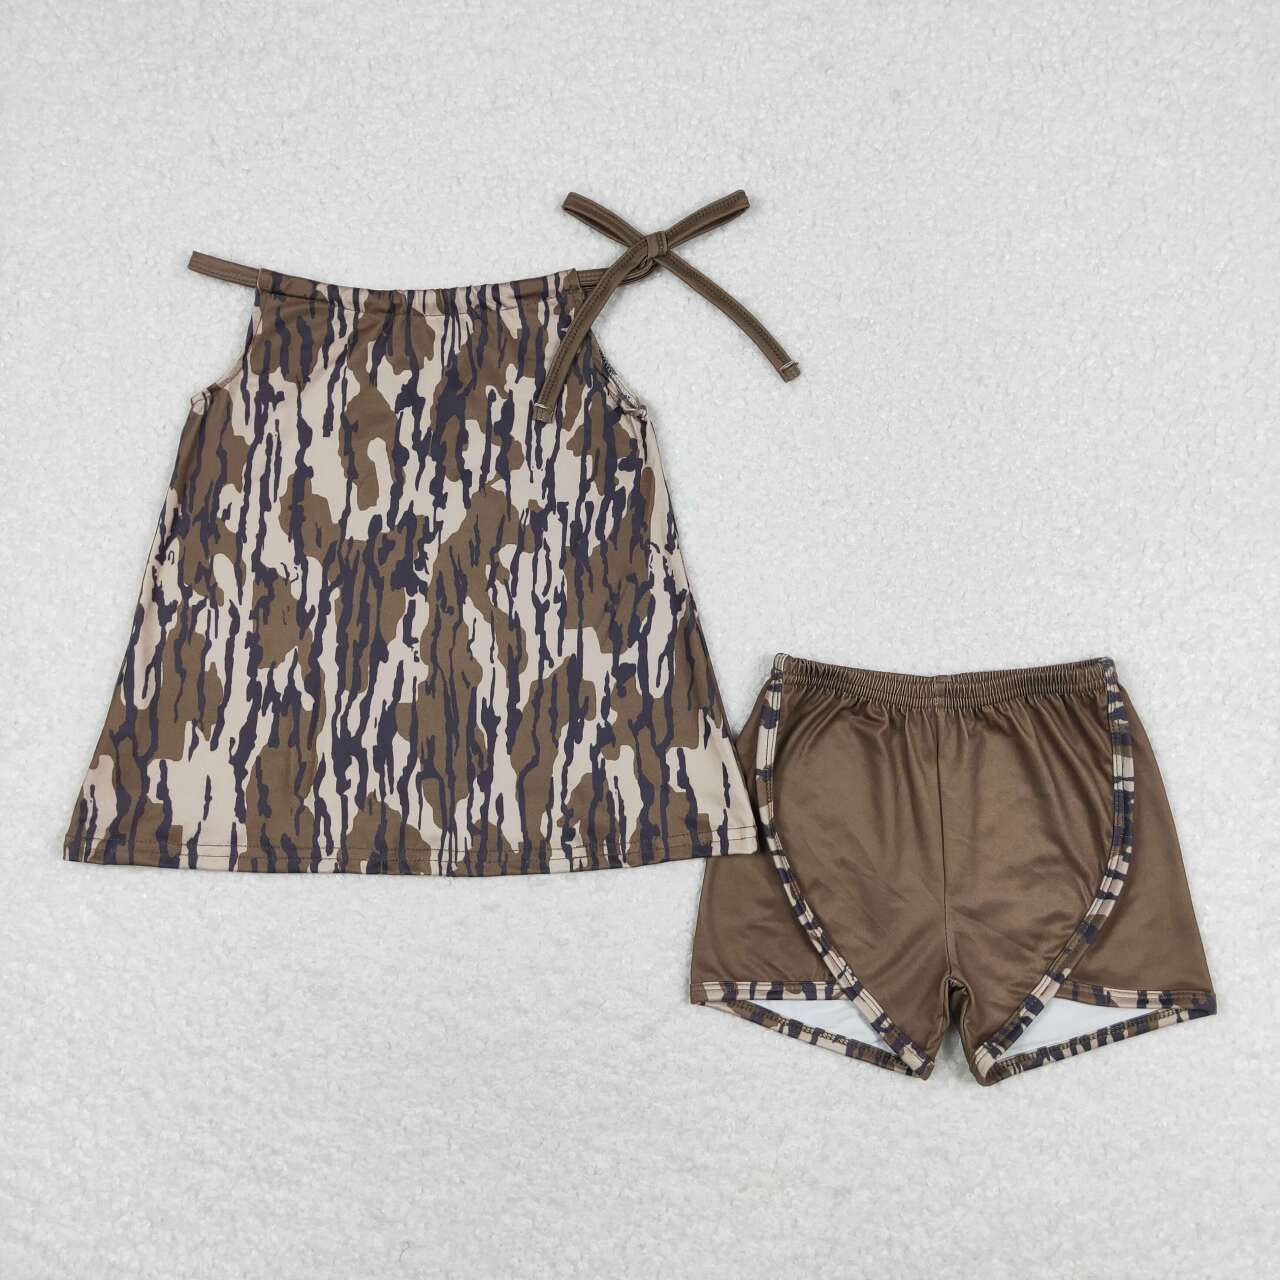 GSSO1012  Camo Print Shorts Girls Summer Clothes Set